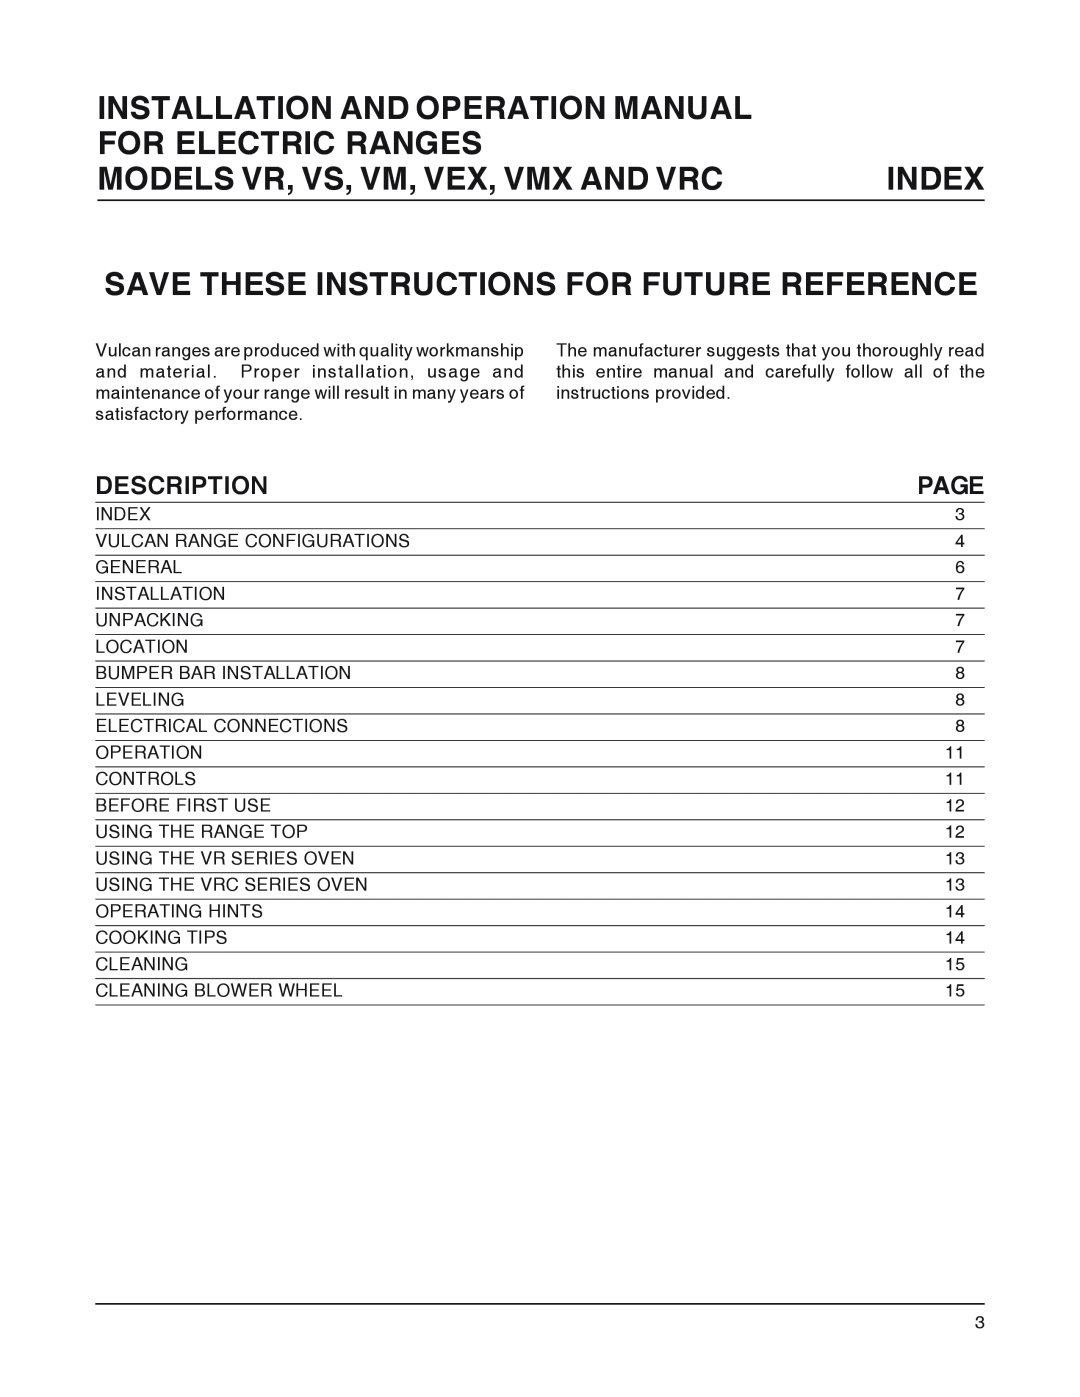 Vulcan-Hart VEX, VRC, VMX, VS For Electric Ranges, Models Vr, Vs, Vm, Vex, Vmx And Vrc, Index, Description, Page 